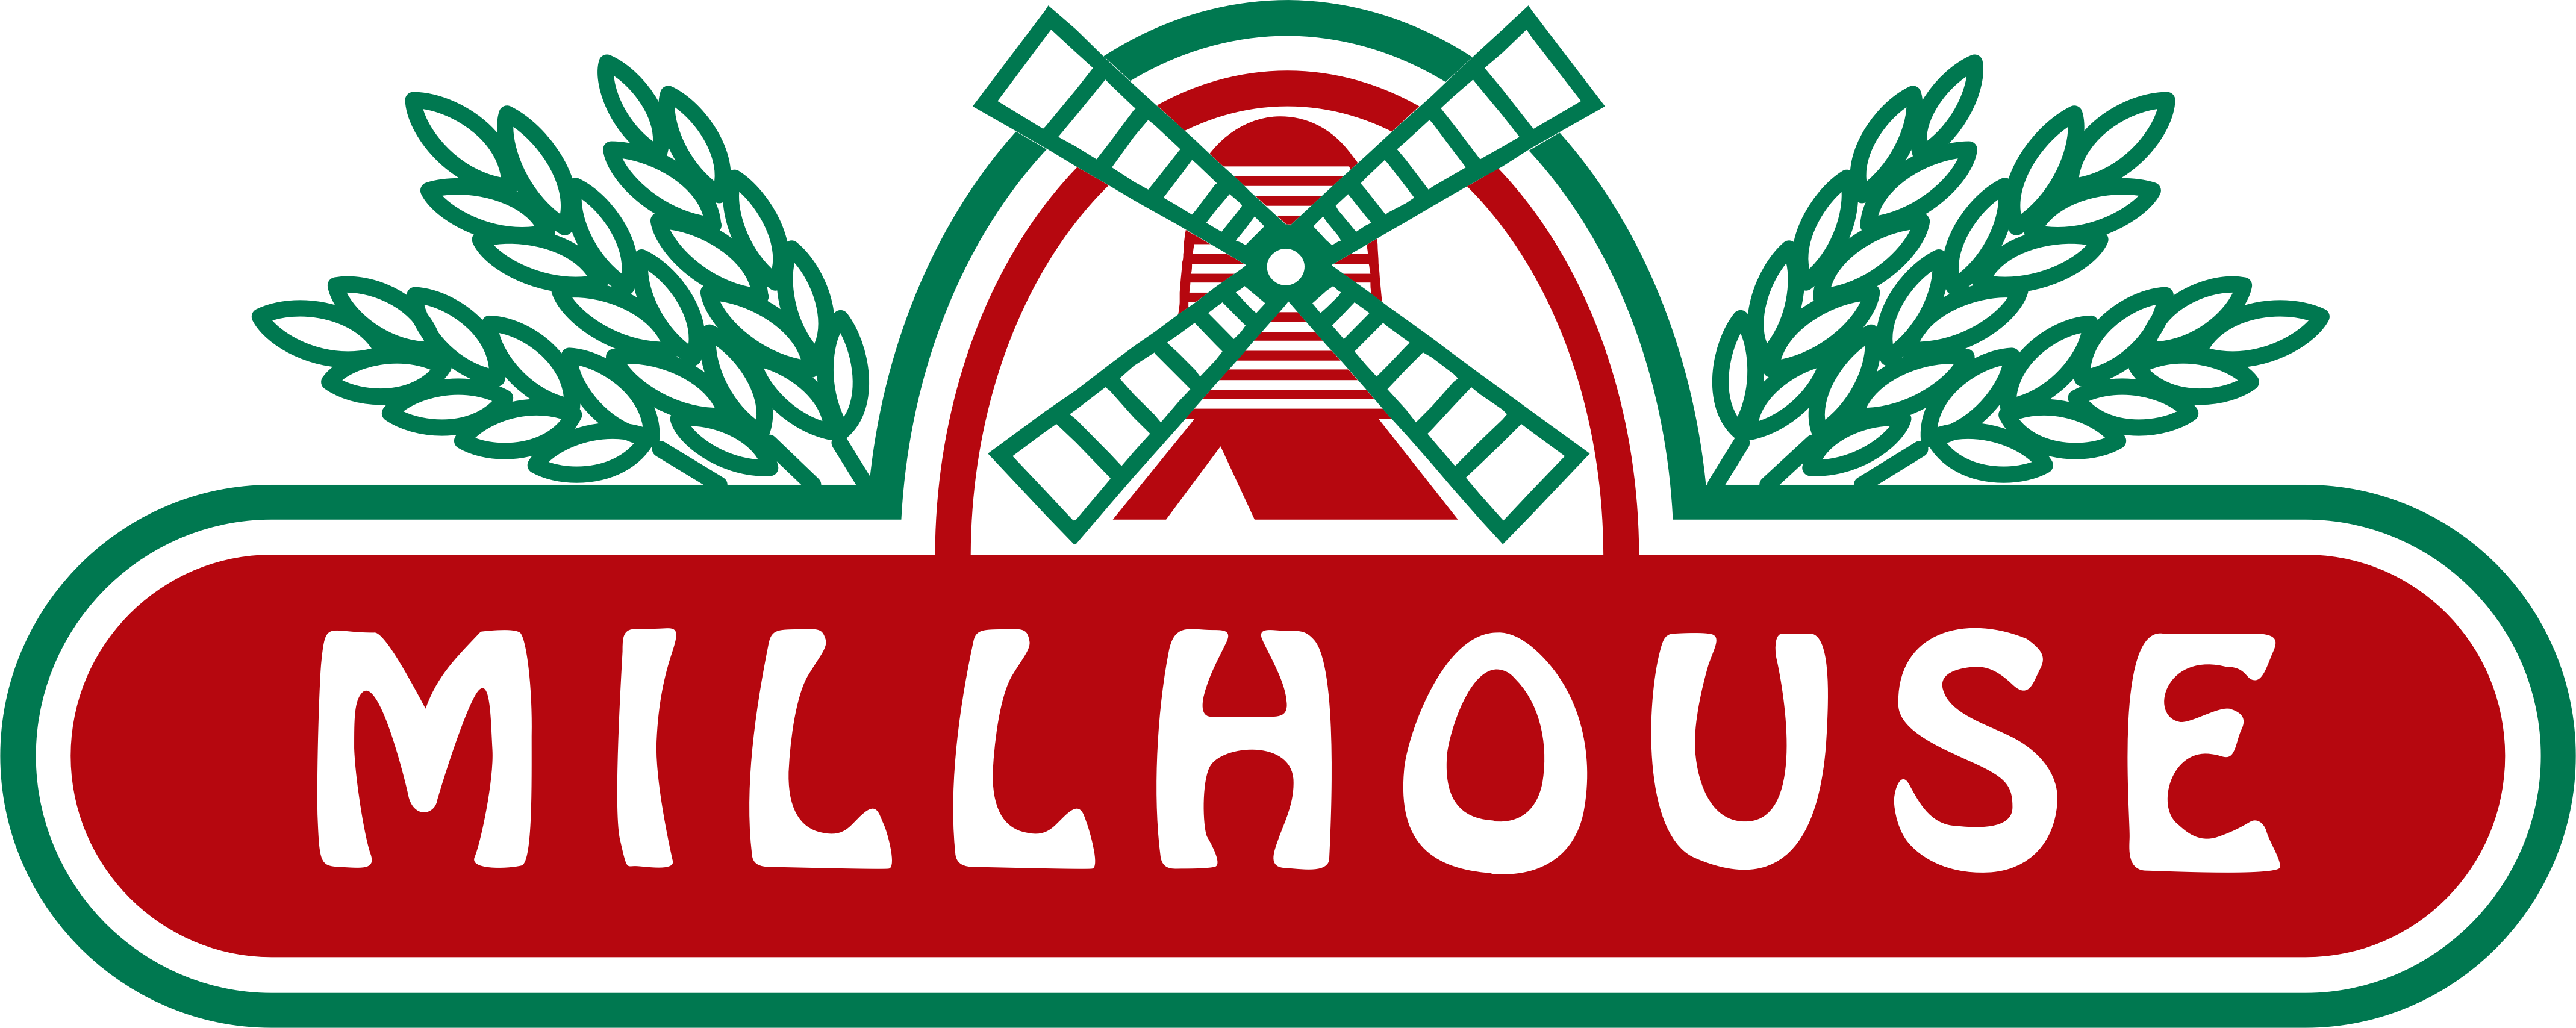 Millhouse new logo